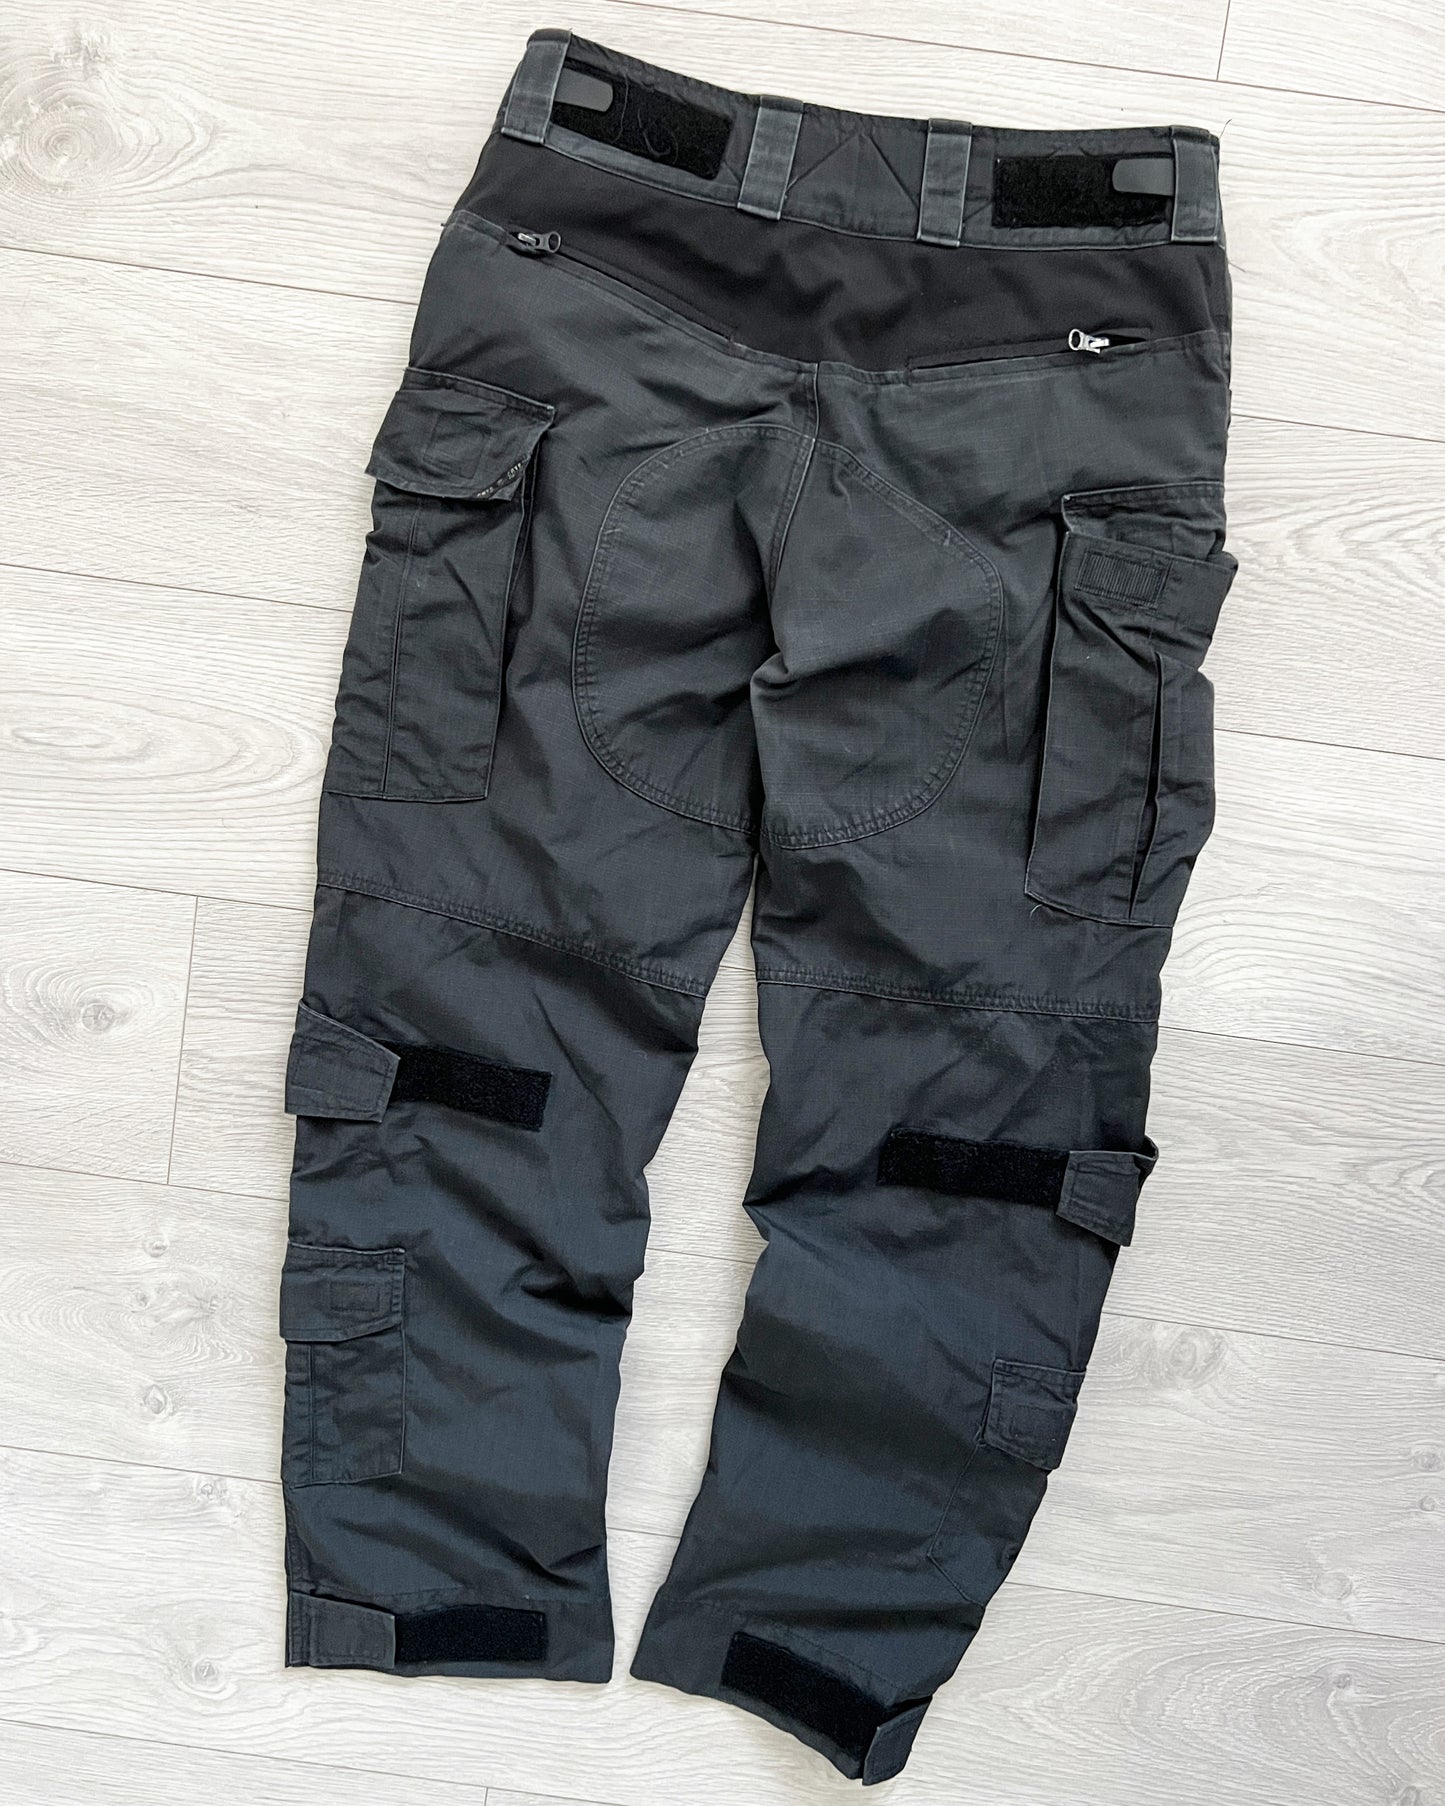 Crye Precision G3 Combat Pants Black - Size 32